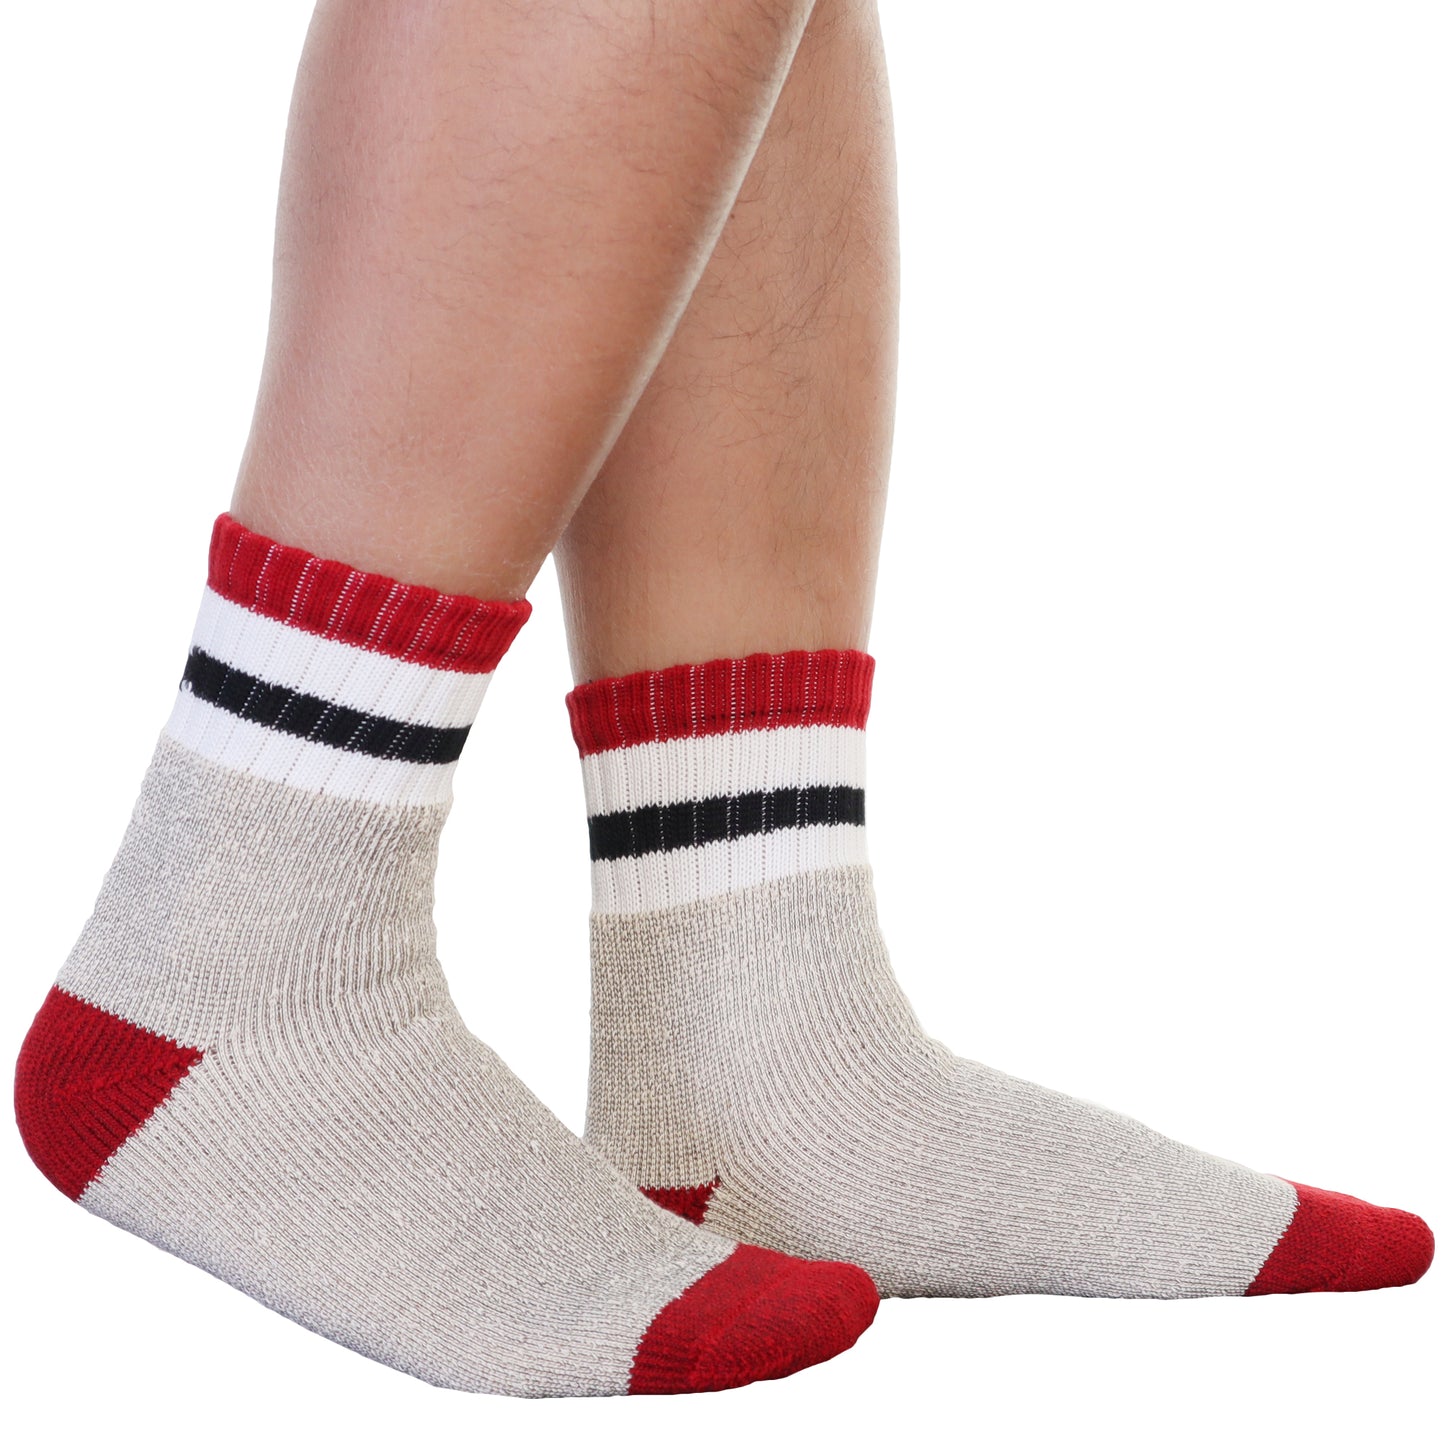 Unisex Quarter Socks with Striped Pattern Cuff (3-Pairs)